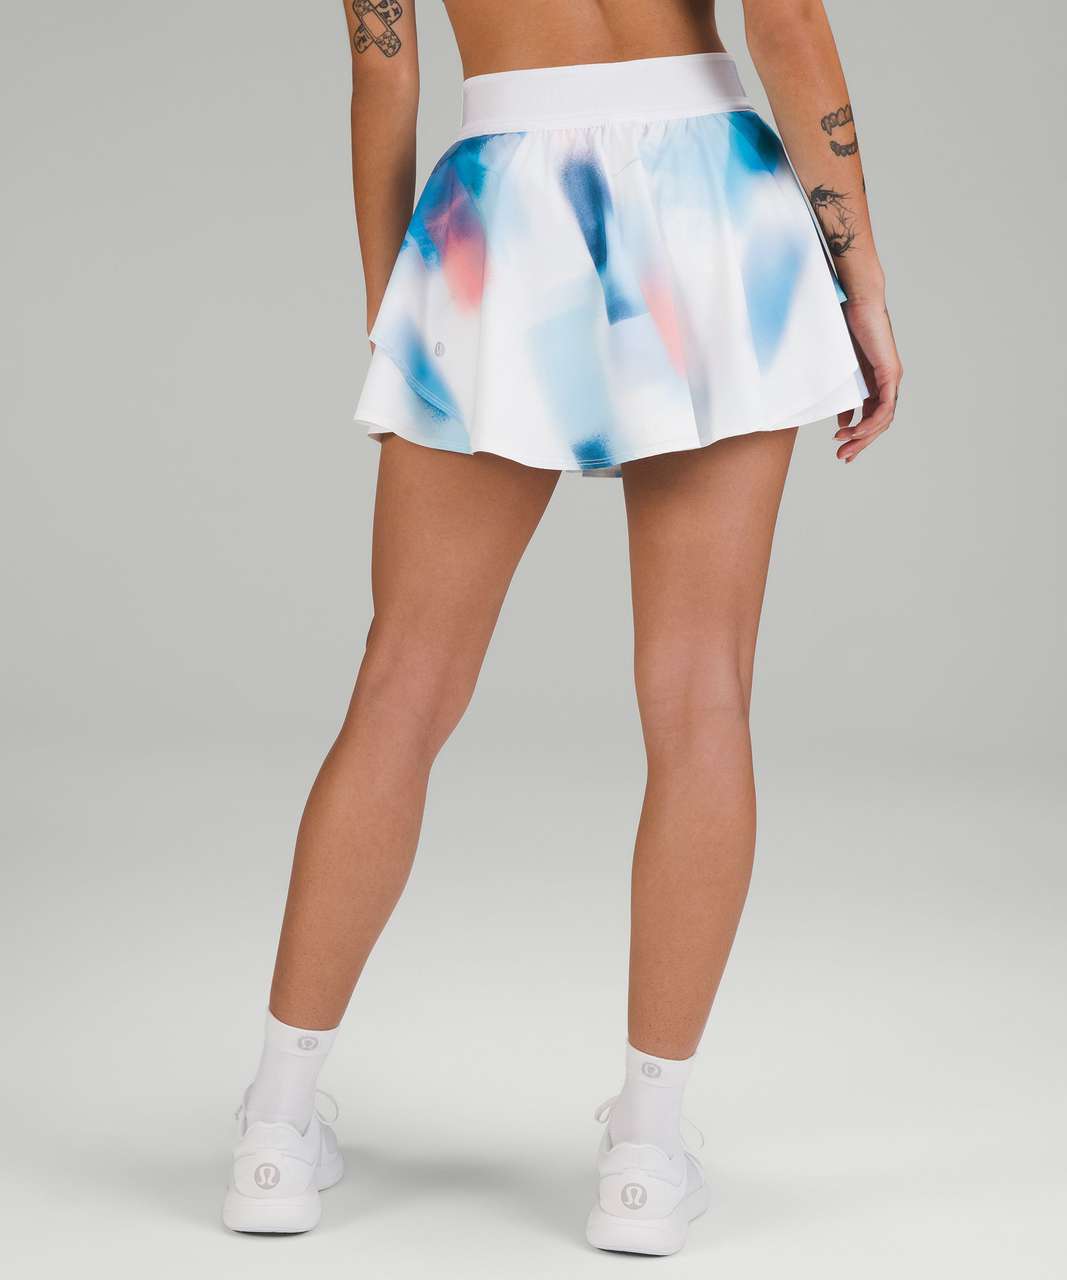 Lululemon Court Rival High-Rise Skirt - Baseline Wash Print Multi